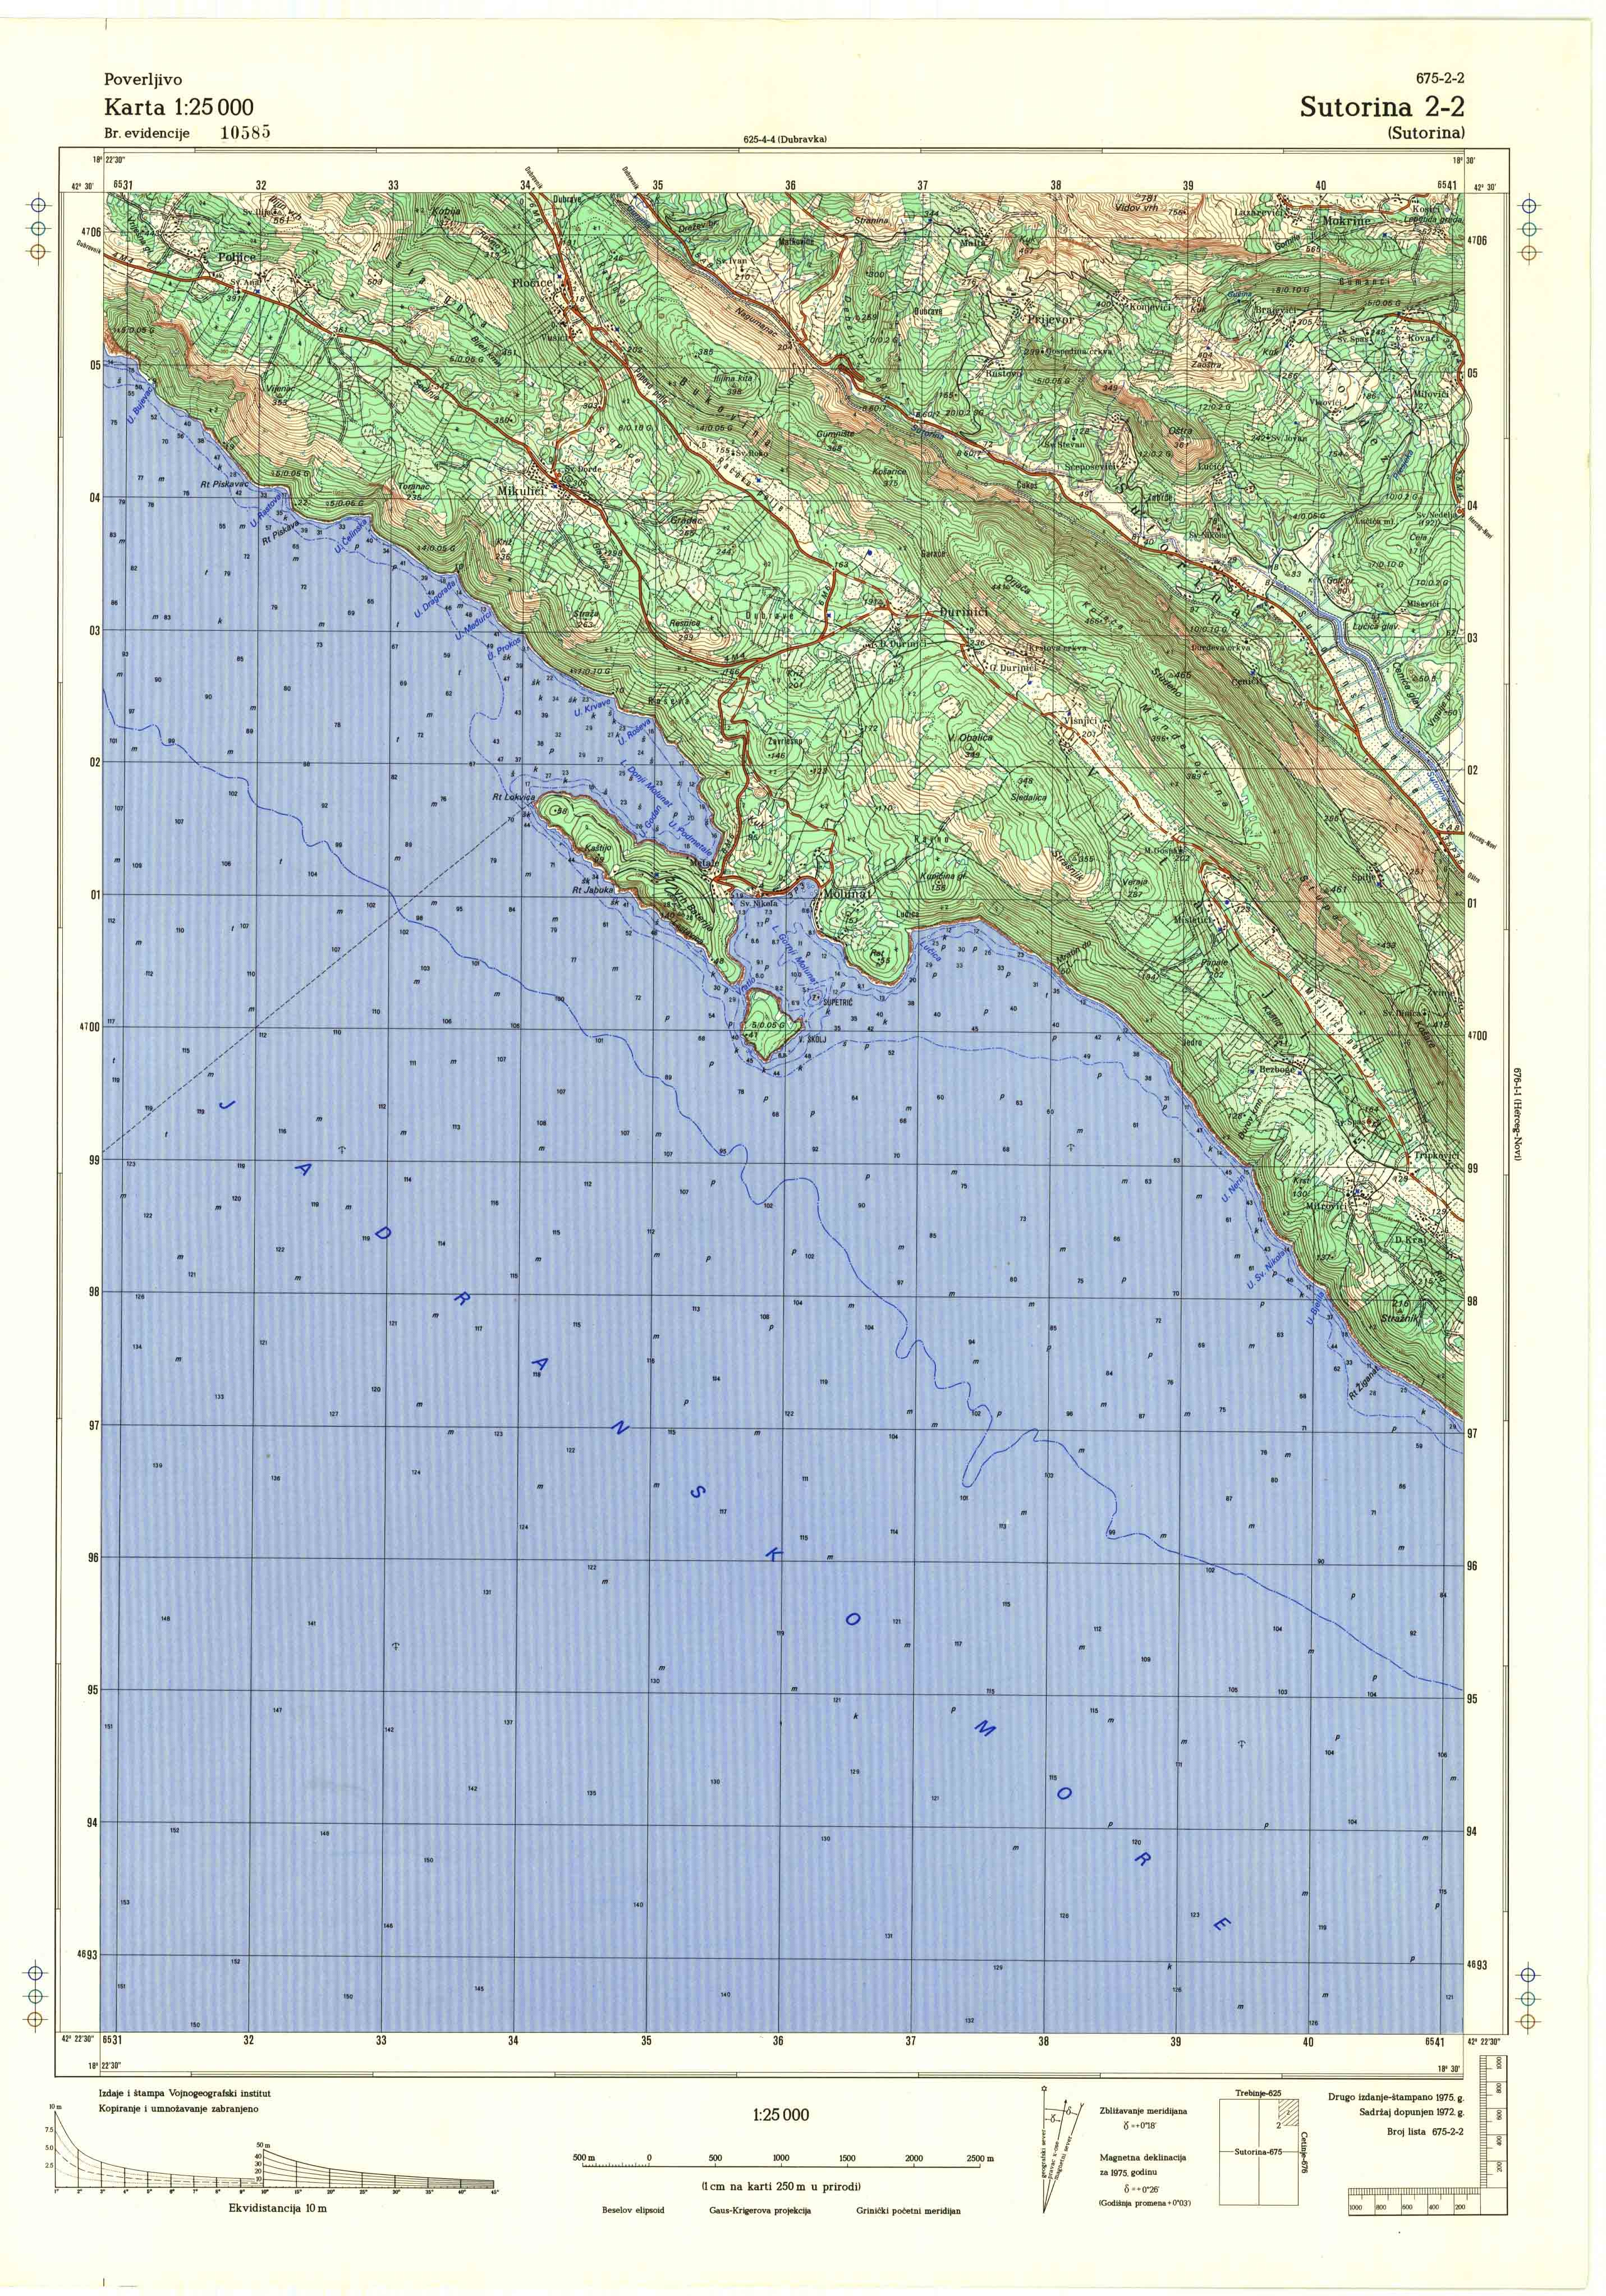  topografska karta crne gore 25000 JNA  sutorina